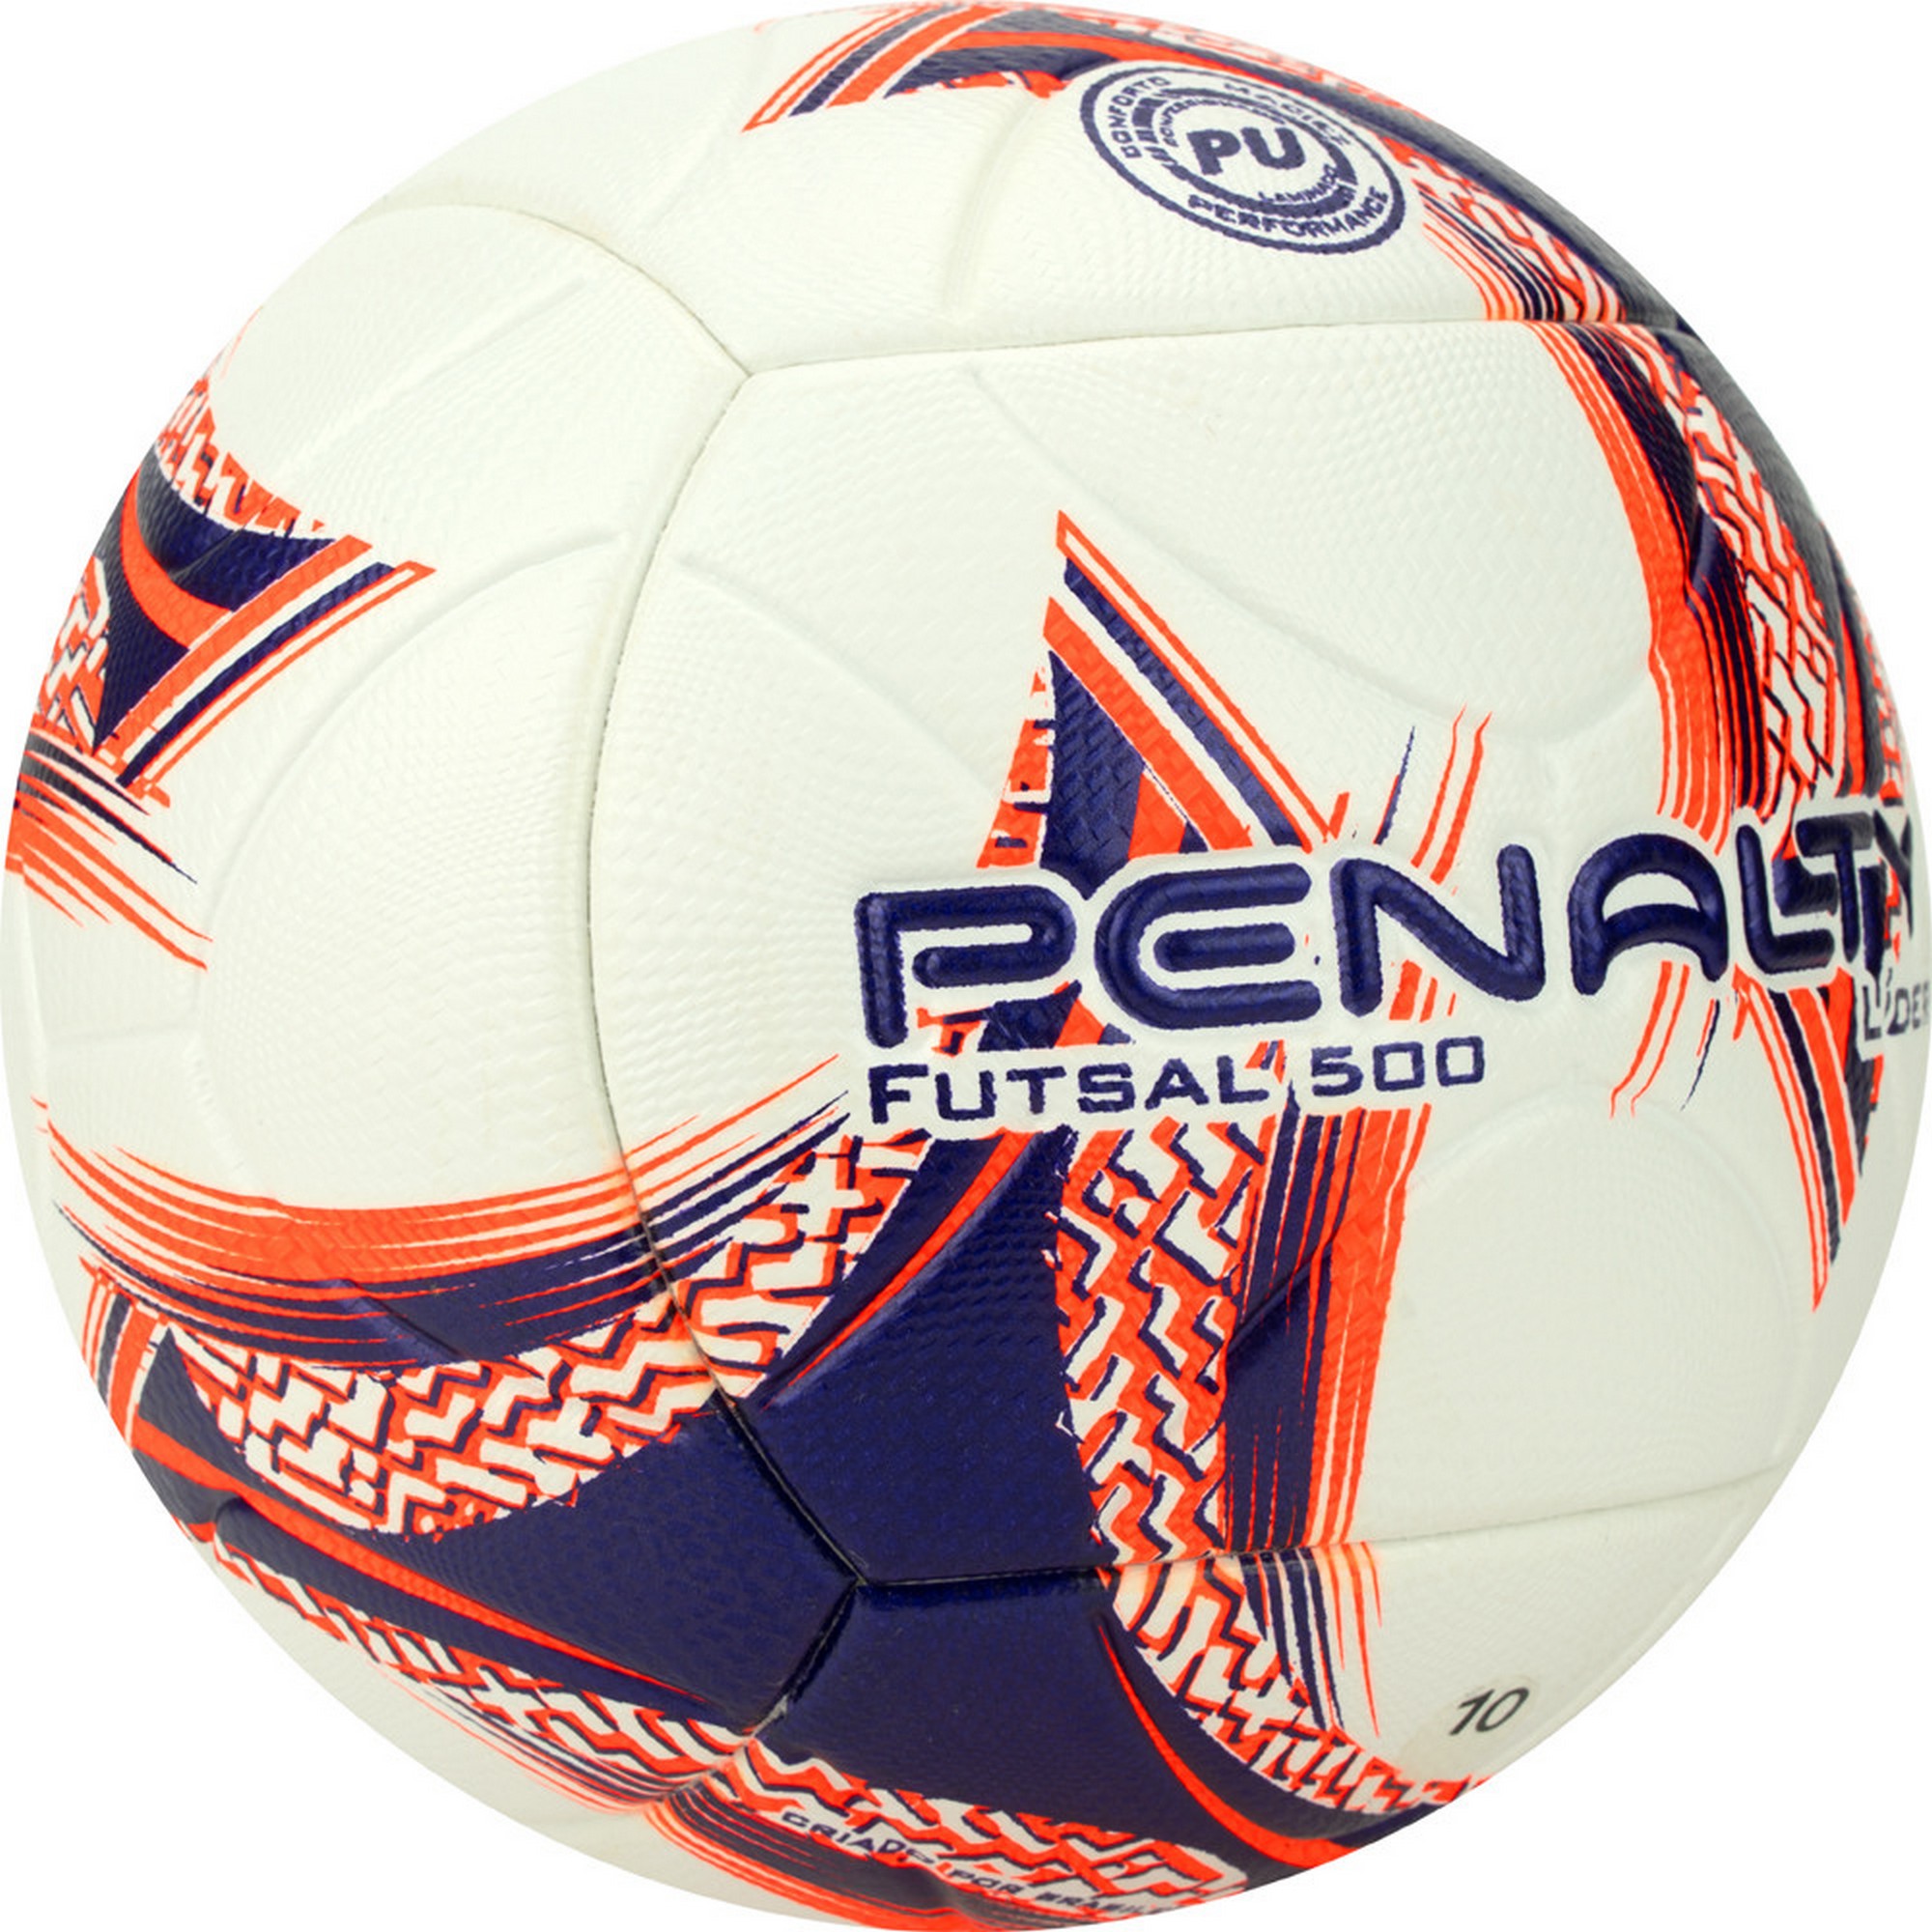 Мяч футзальный Penalty Bola Futsal Lider XXIII 5213411239-U р.4 2000_2000